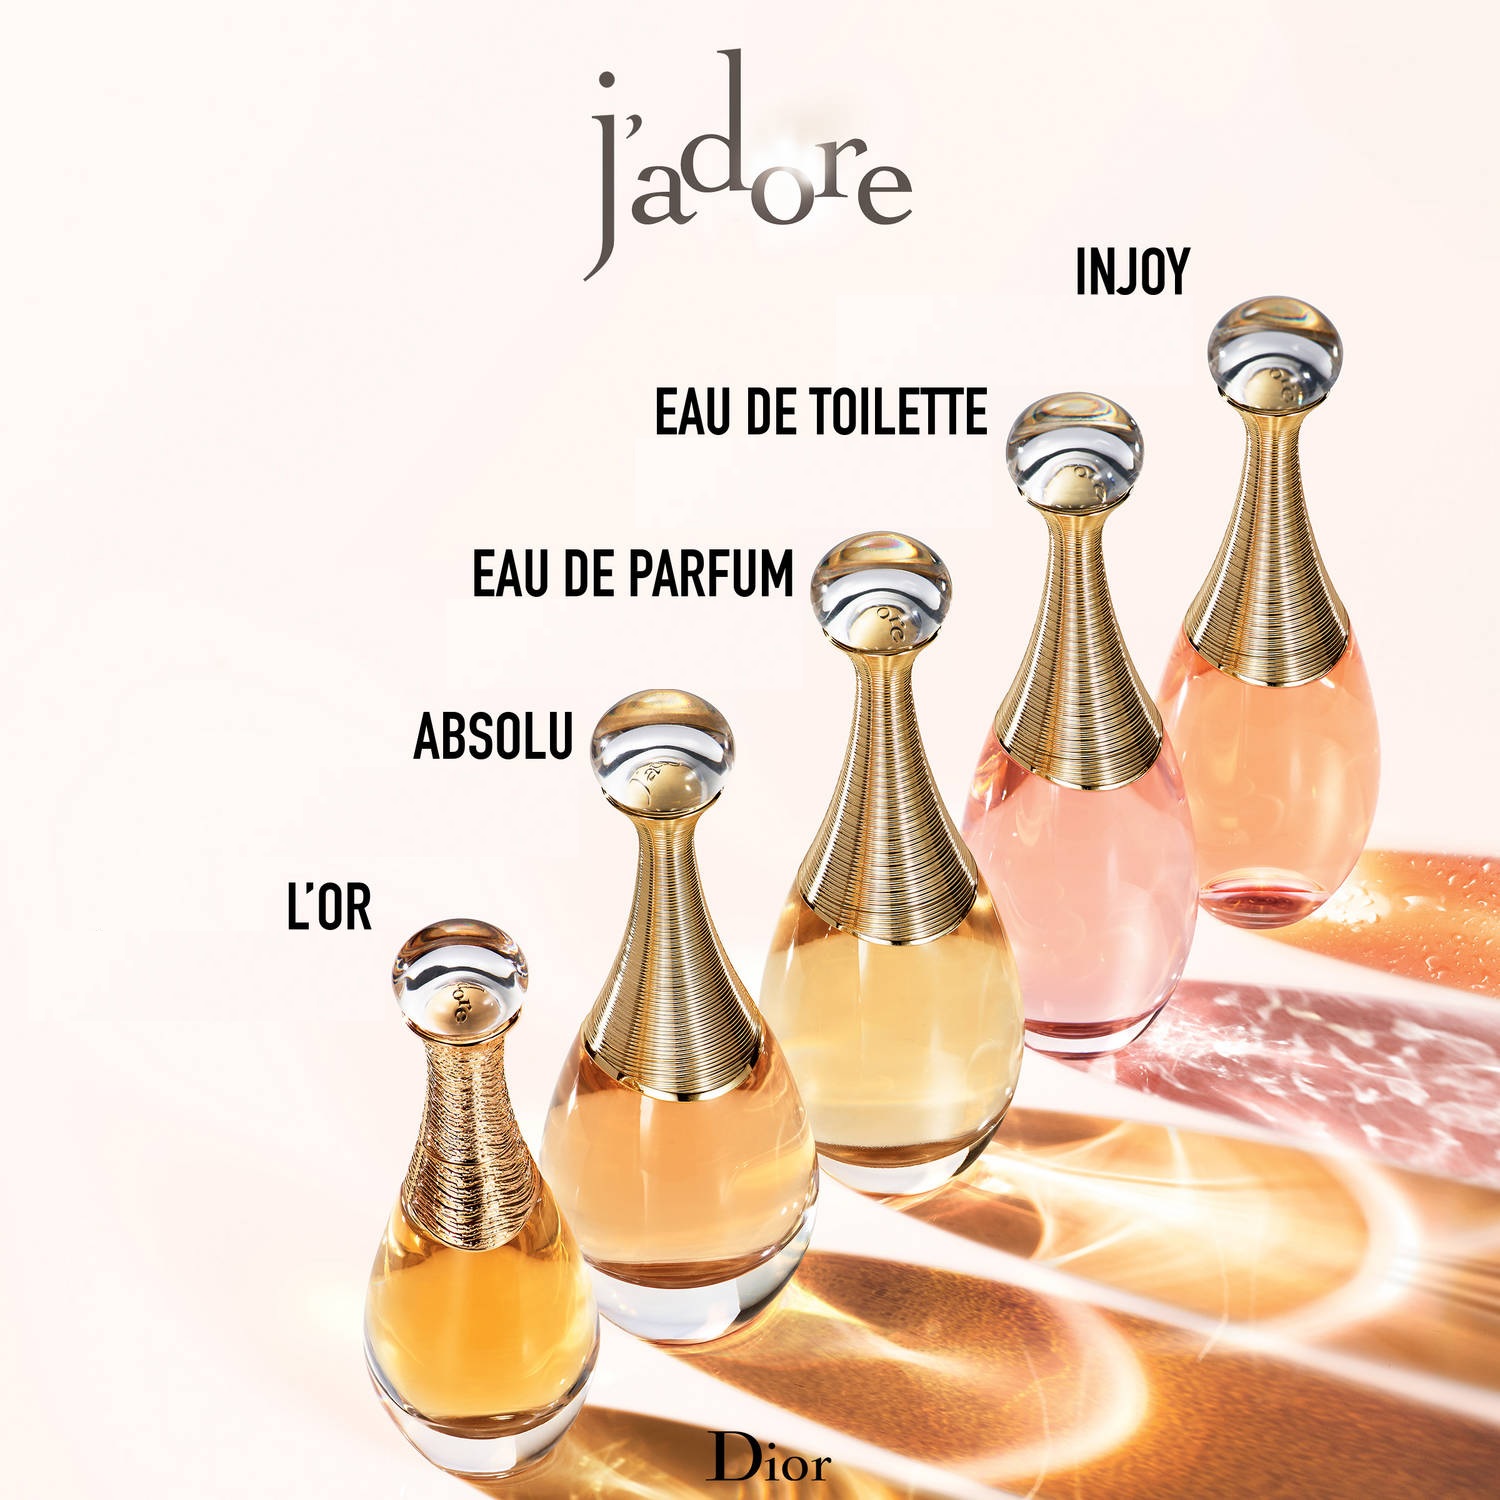 dior jadore eau de parfum,OFF 60%,www.concordehotels.com.tr